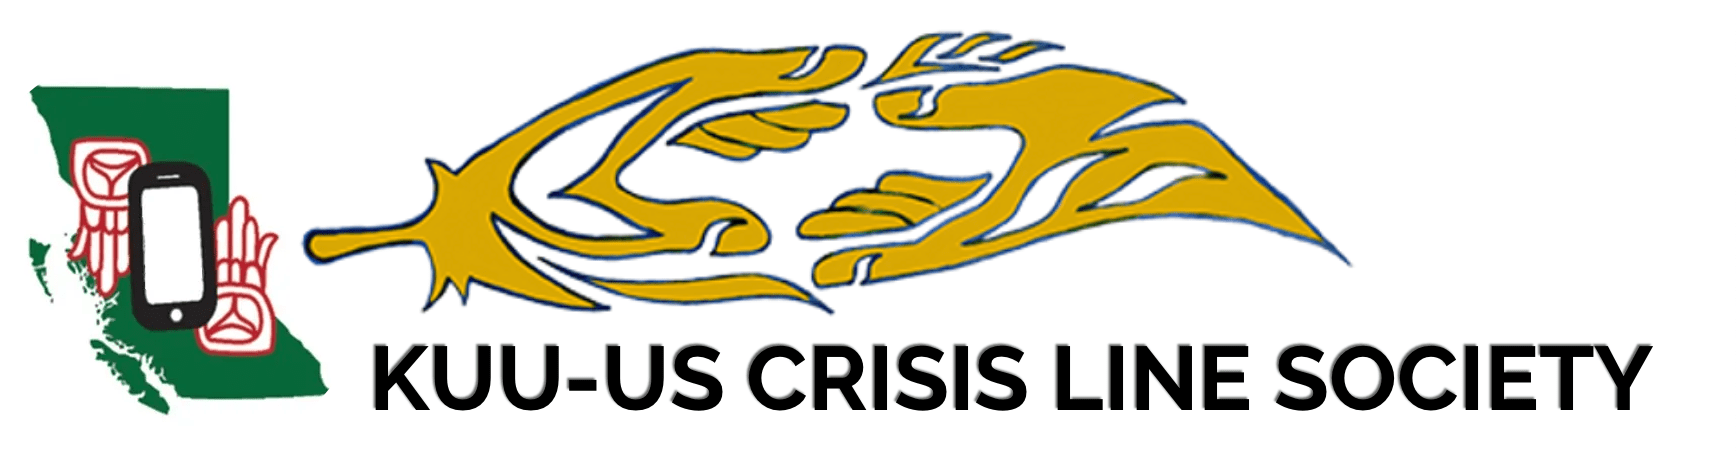 Kuu-us crisis line society logo